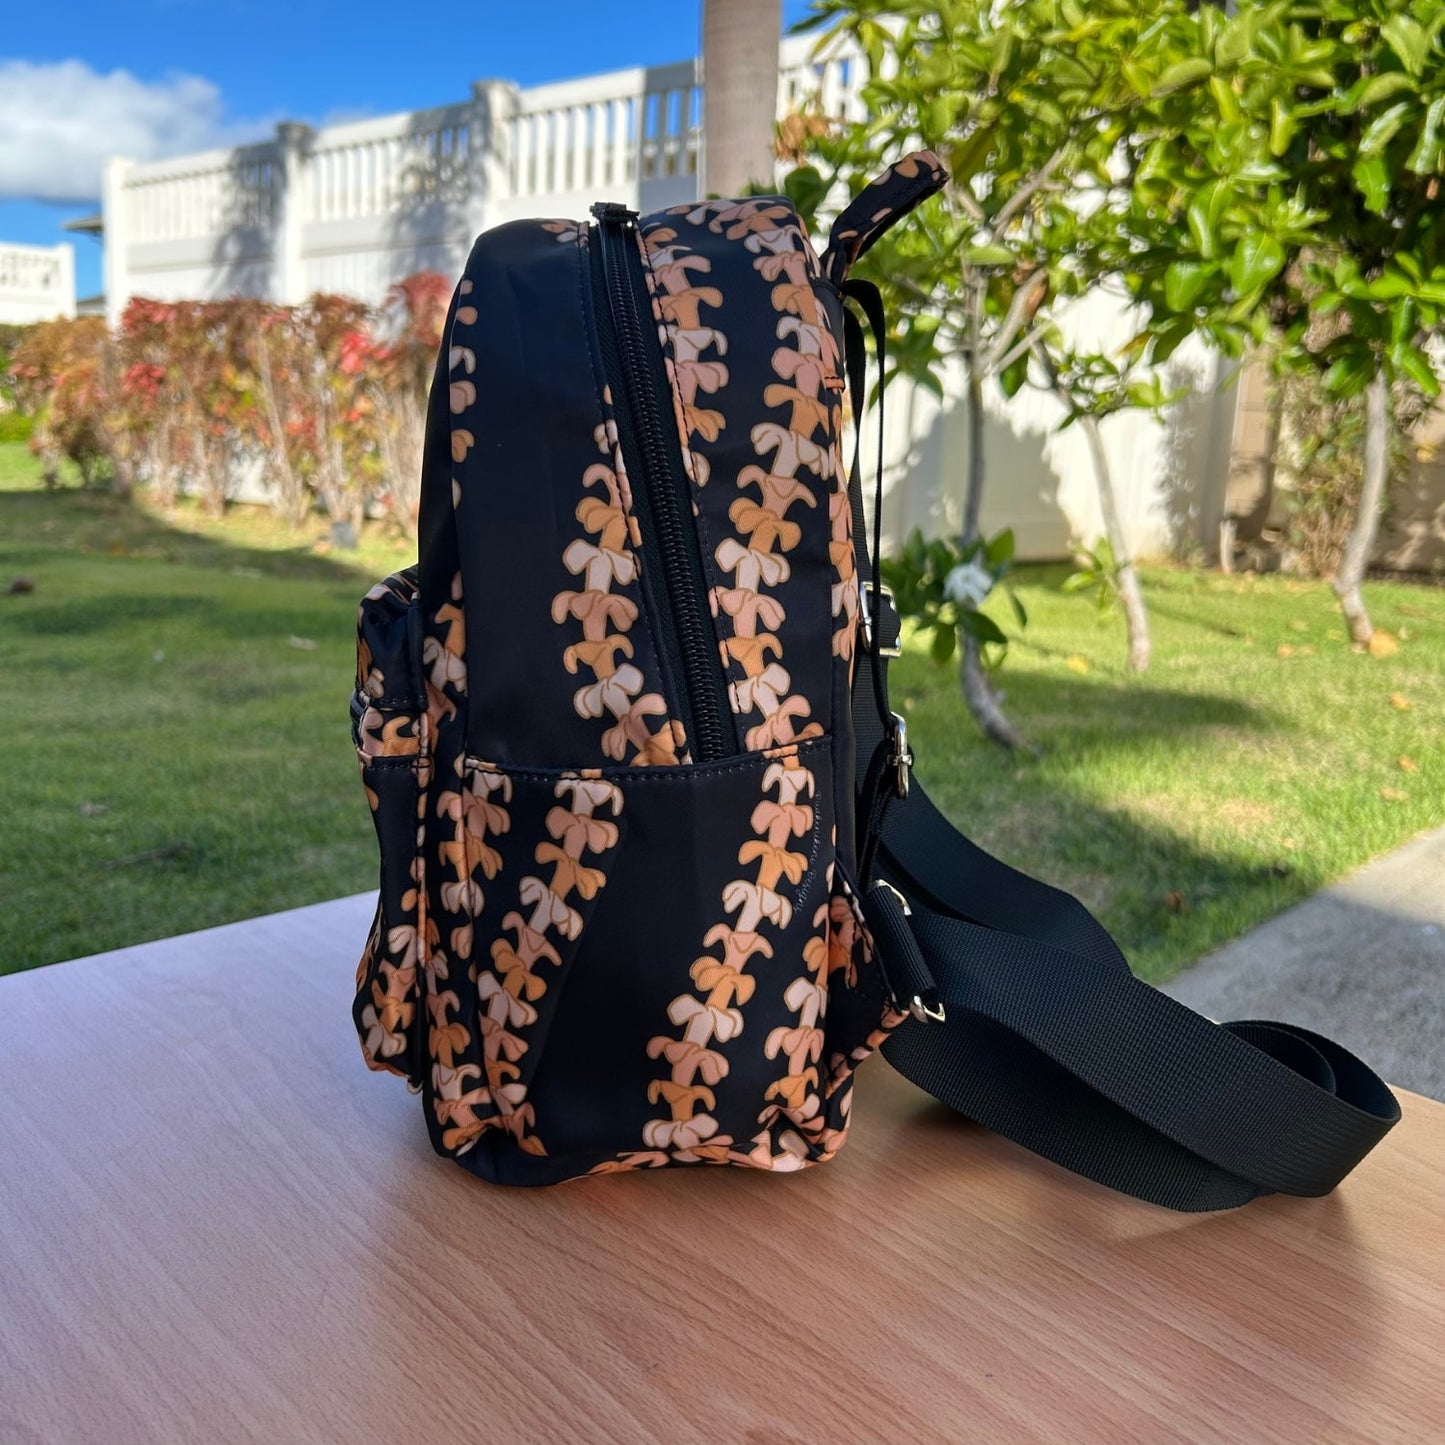 Puakenikeni small backpack purse from Puakenikeni Designs side view